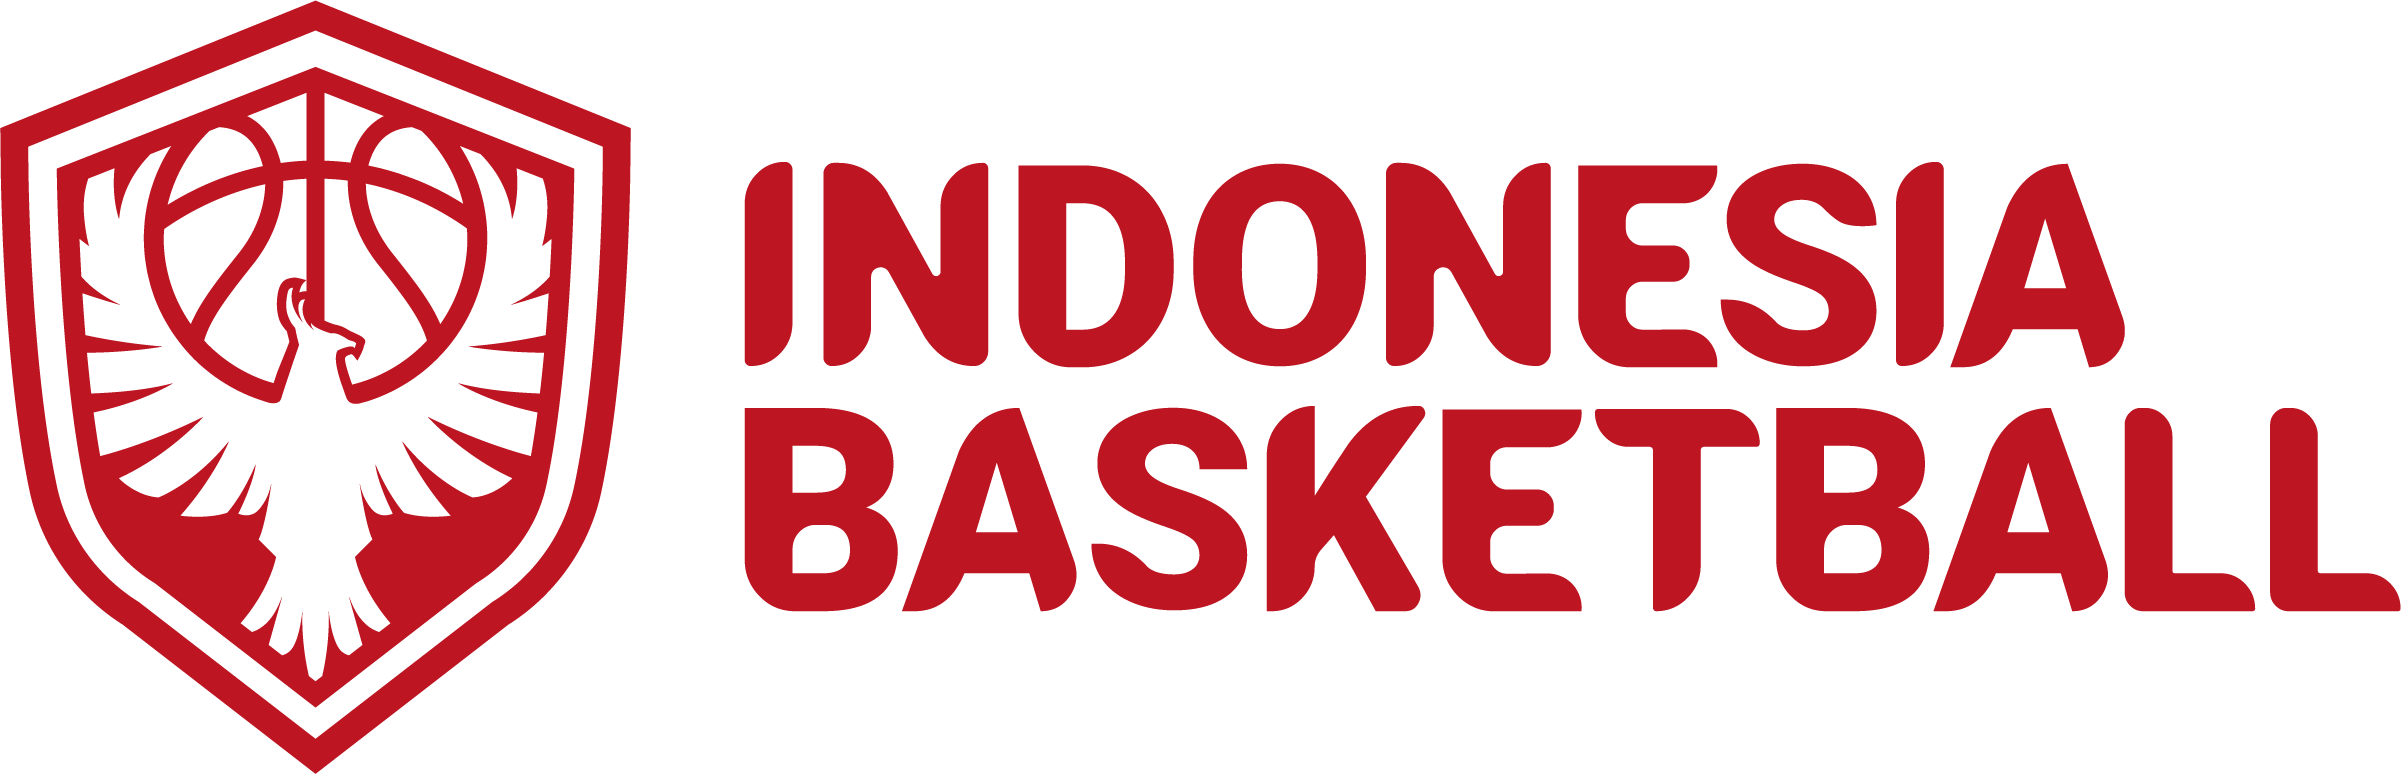 Indonesia Basketball